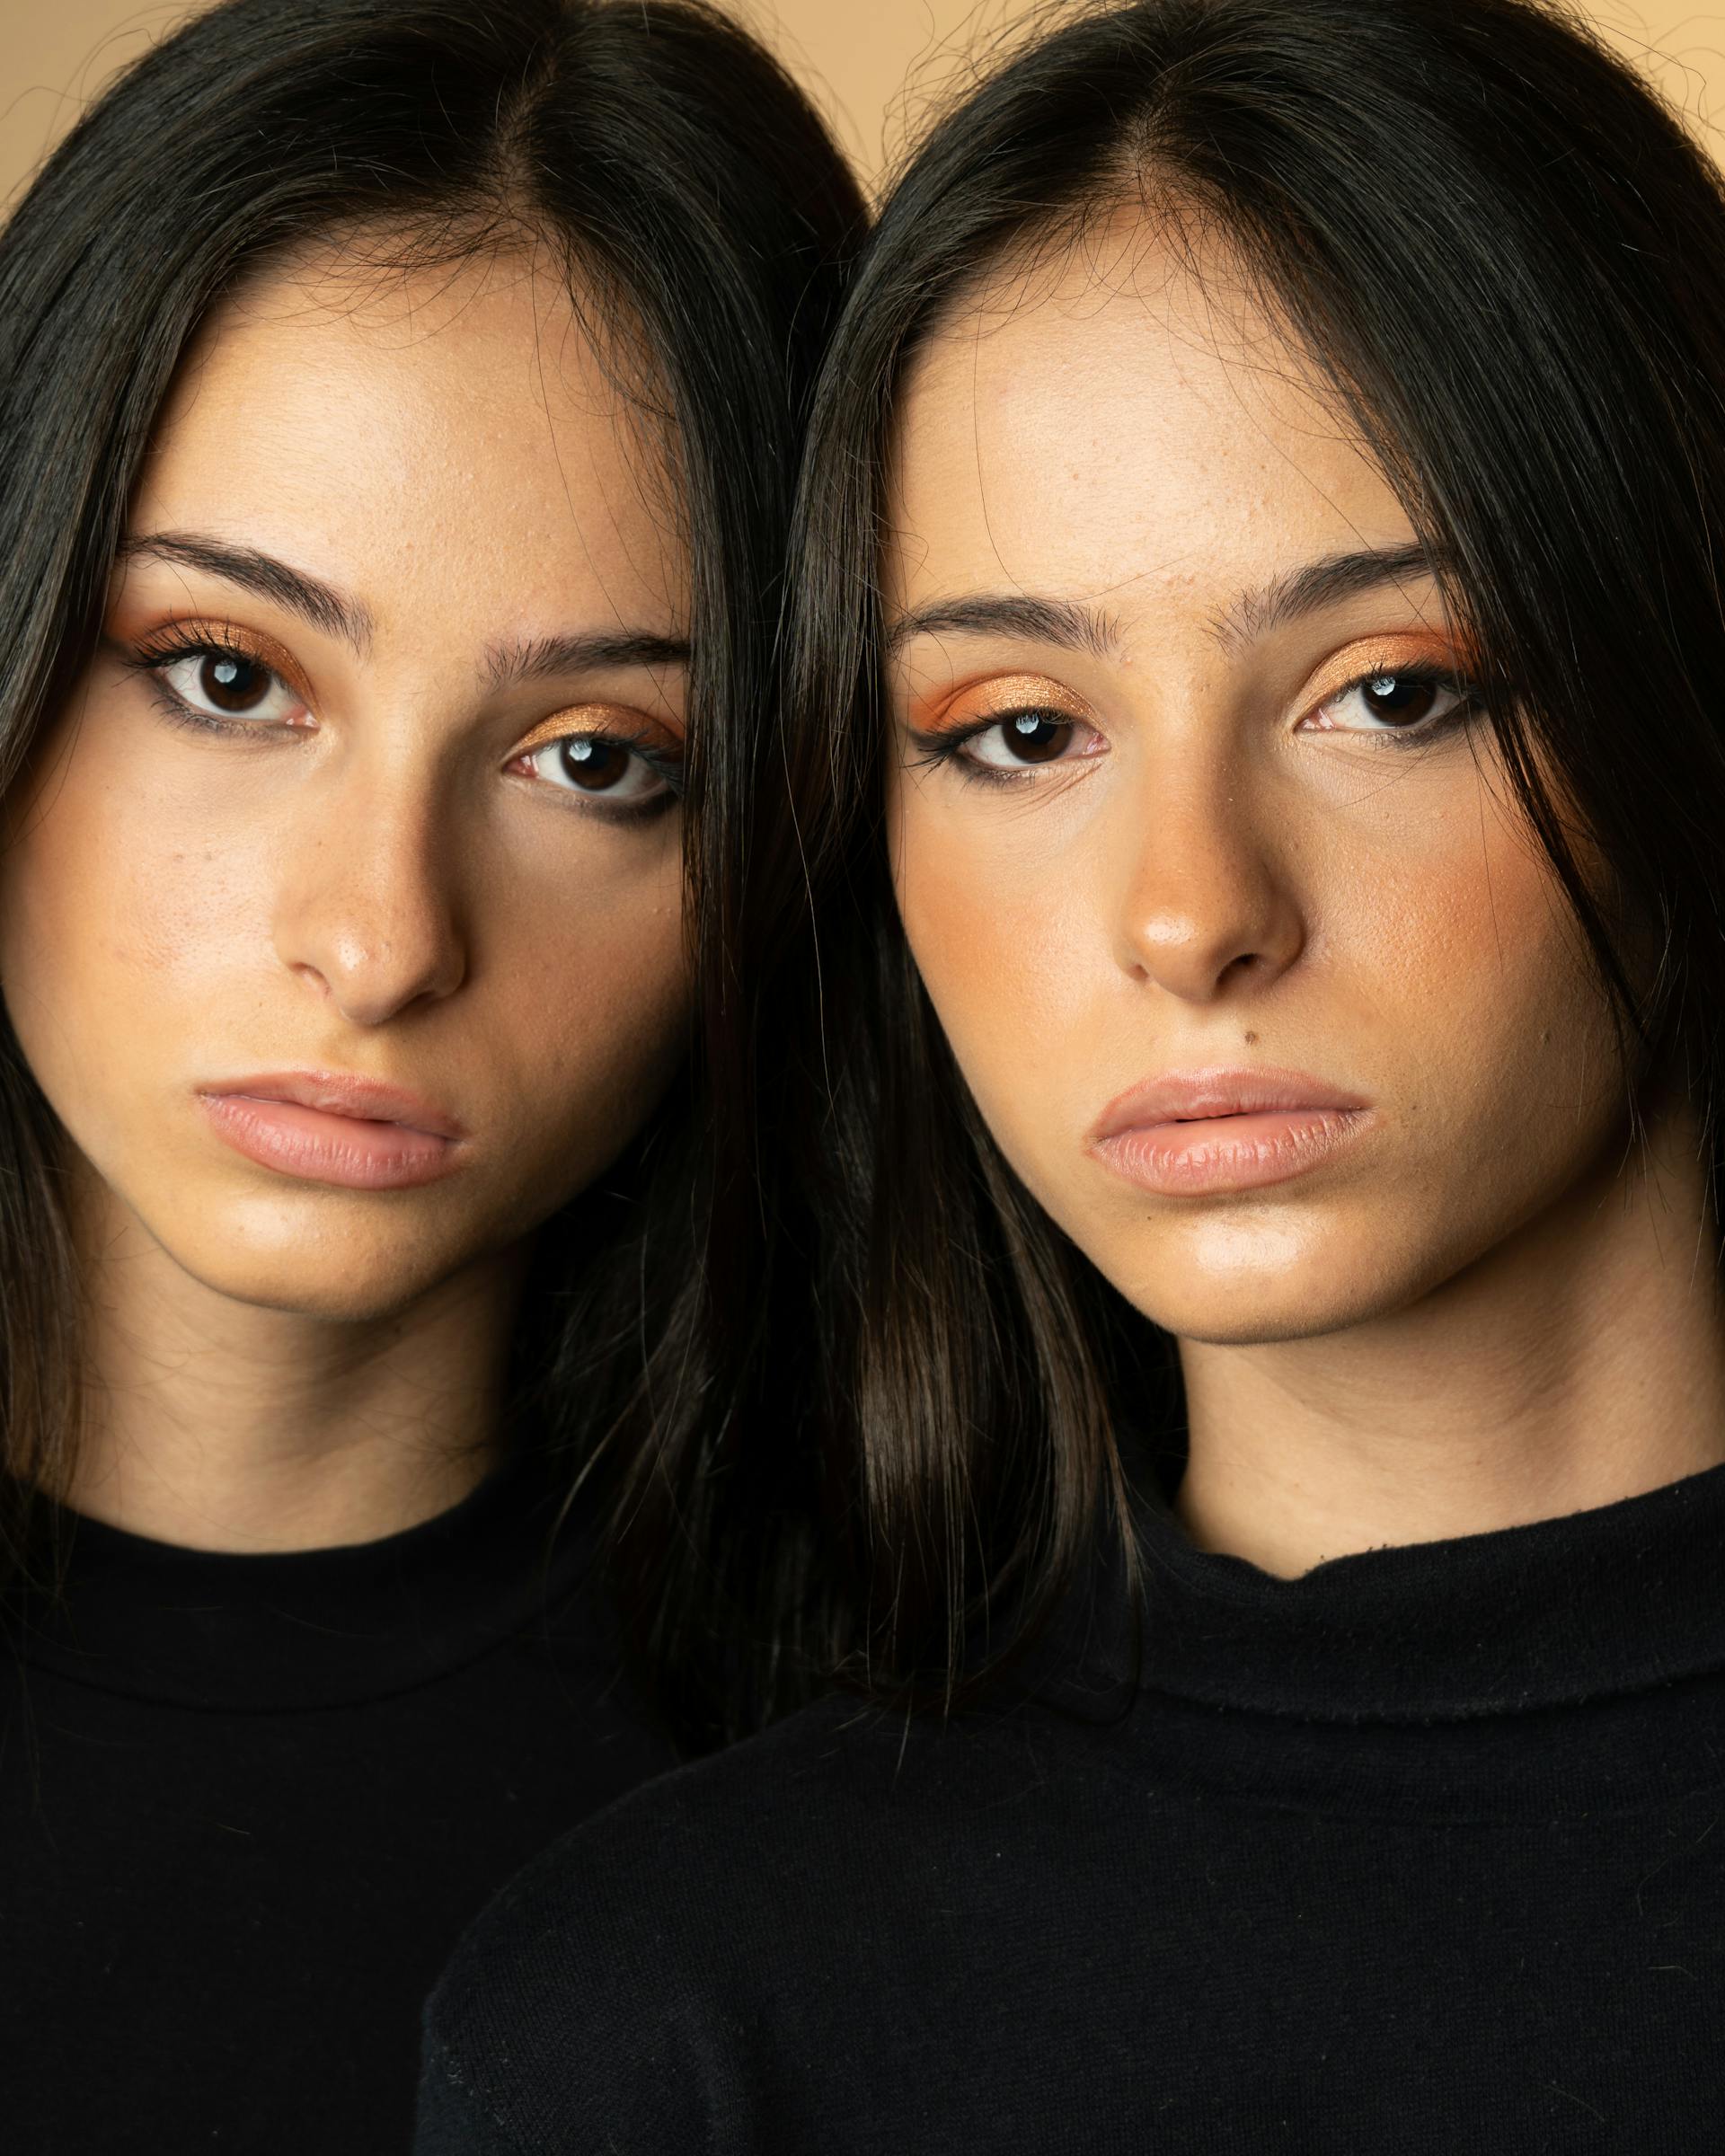 Twin teenage girls | Source: Pexels